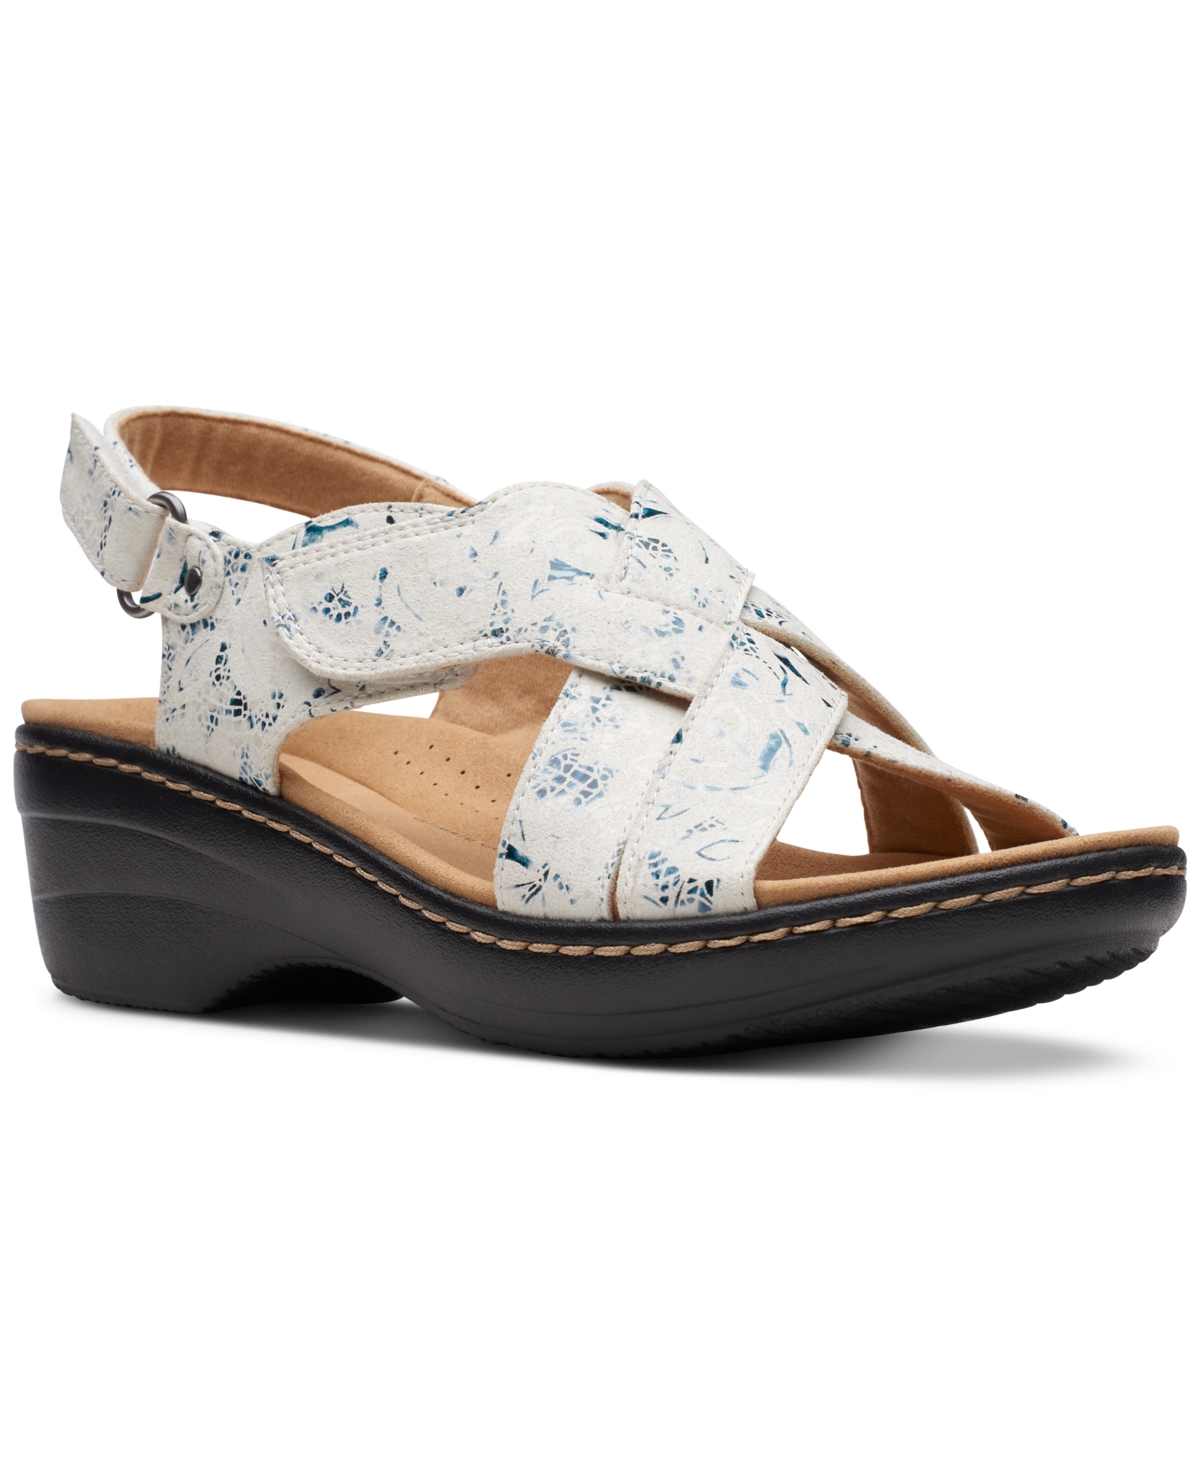 Clarks Women's Merliah Echo Slip-On Slingback Wedge Sandals Women's Shoes